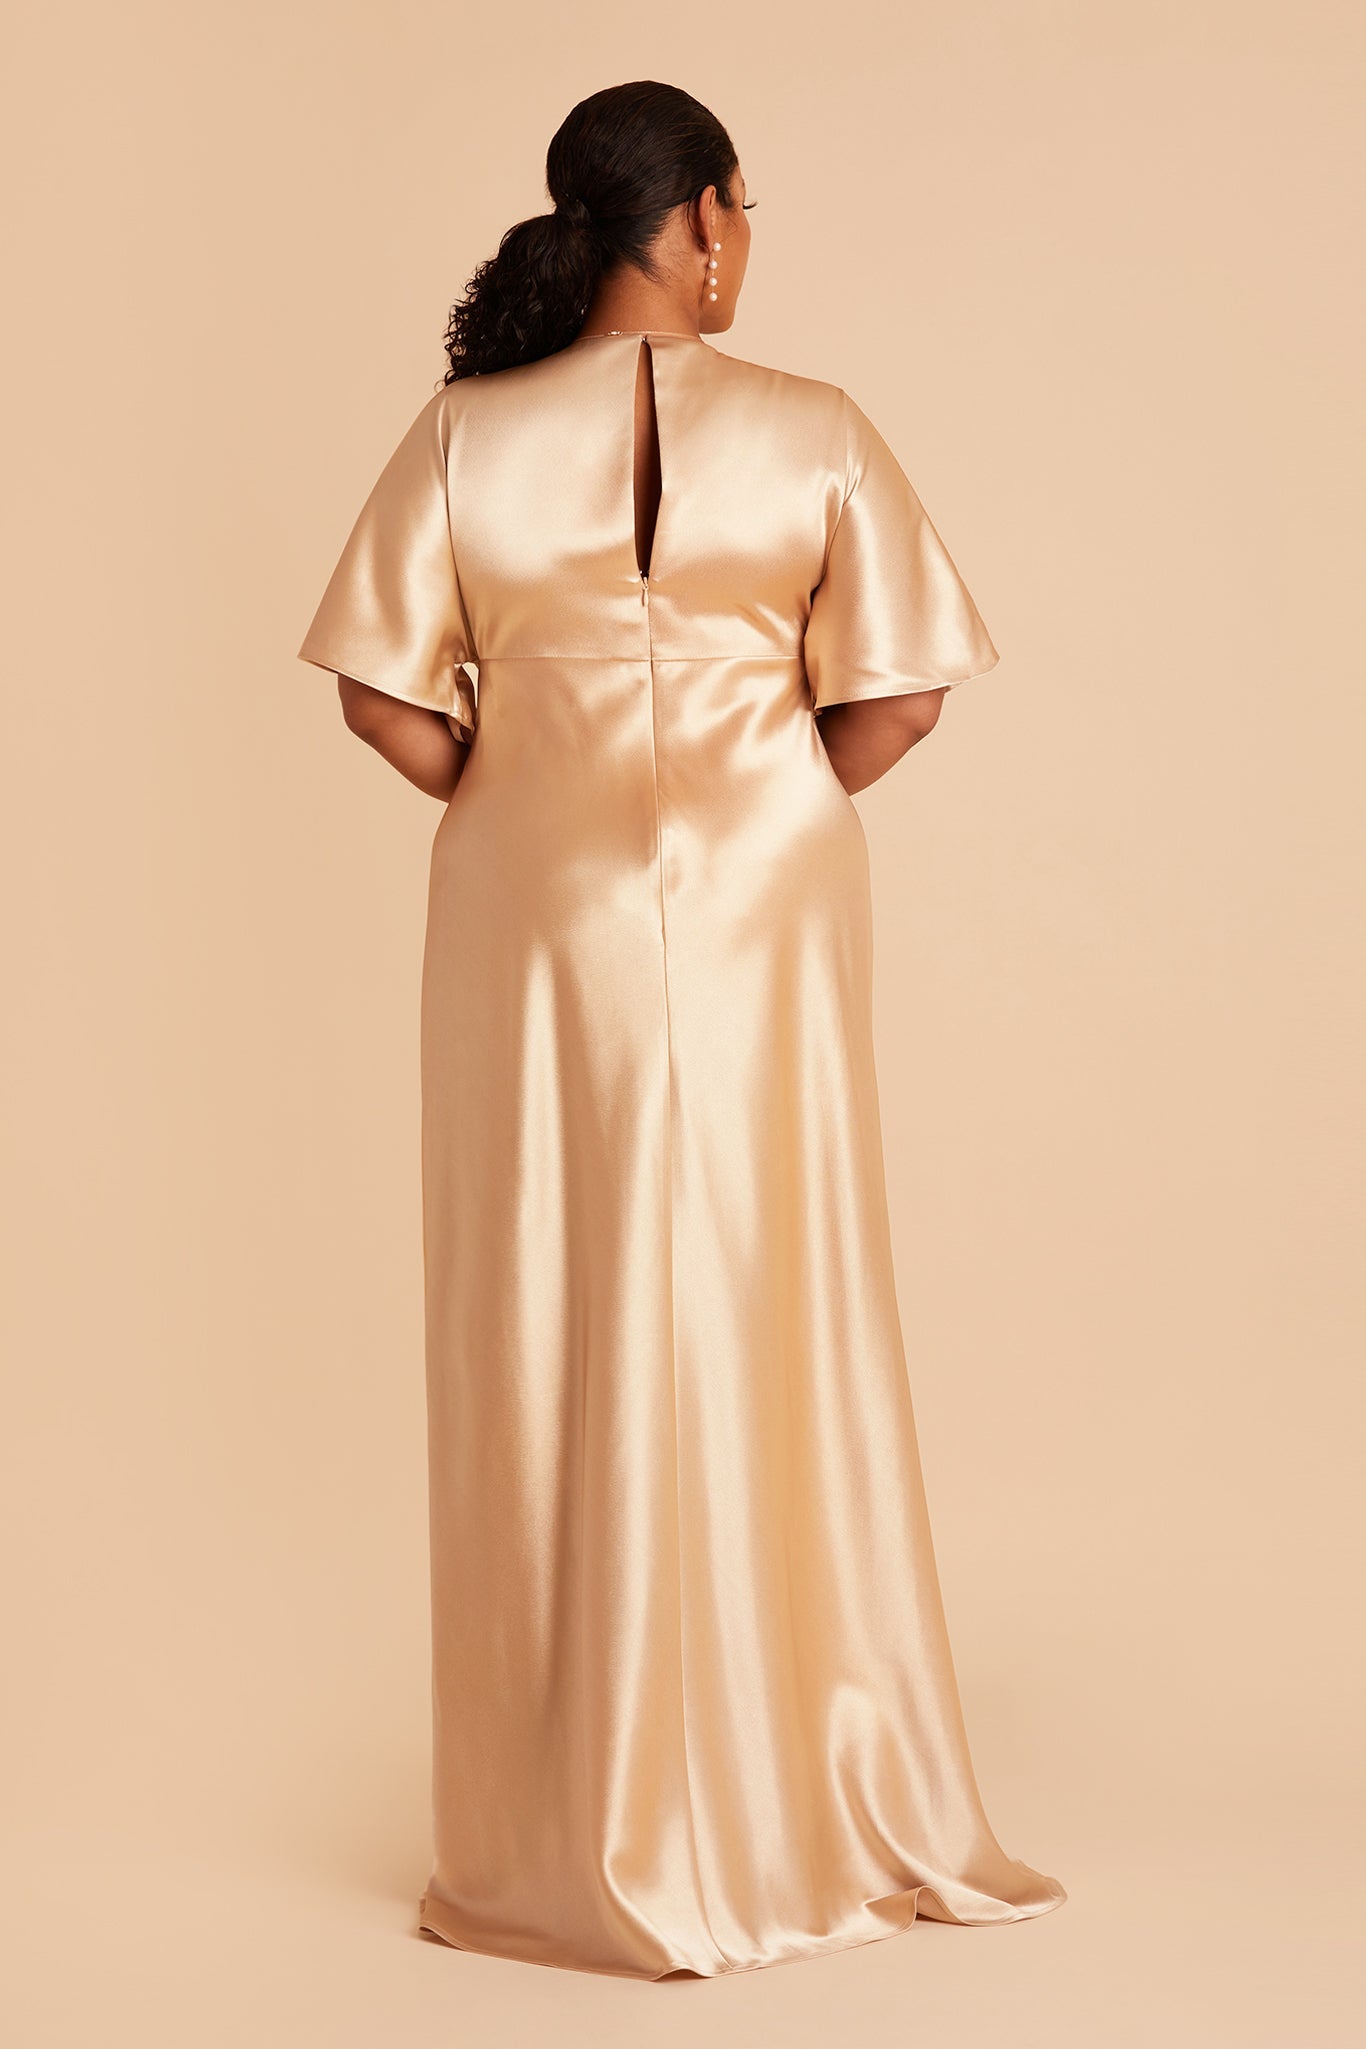 Jesse Satin Dress Curve dress in gold satin by Birdy Grey, front view